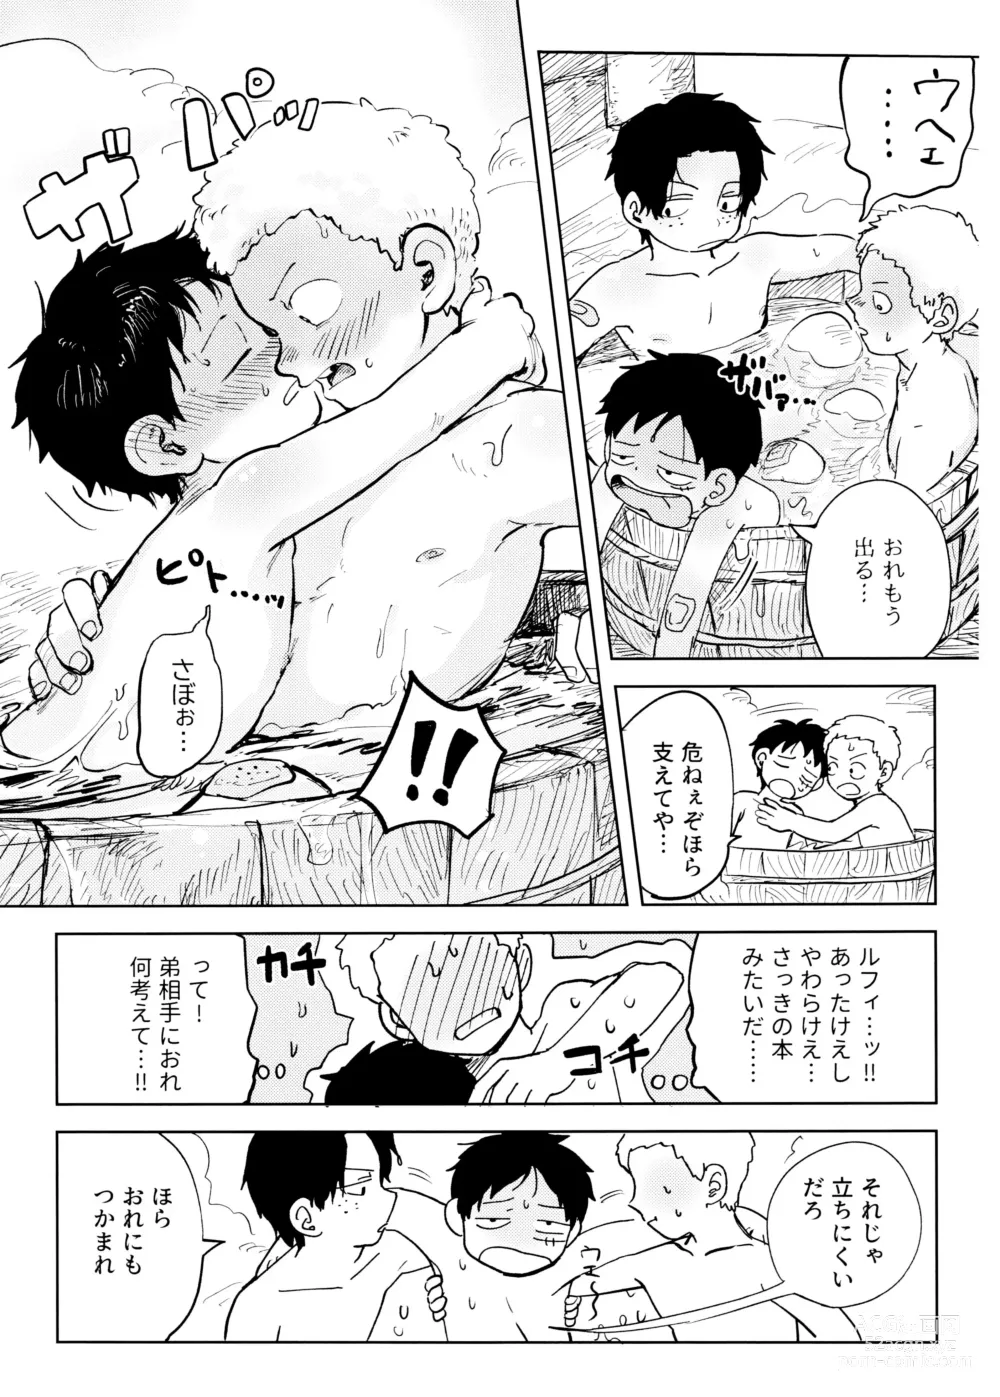 Page 10 of doujinshi Himitsu no Colubo Yama